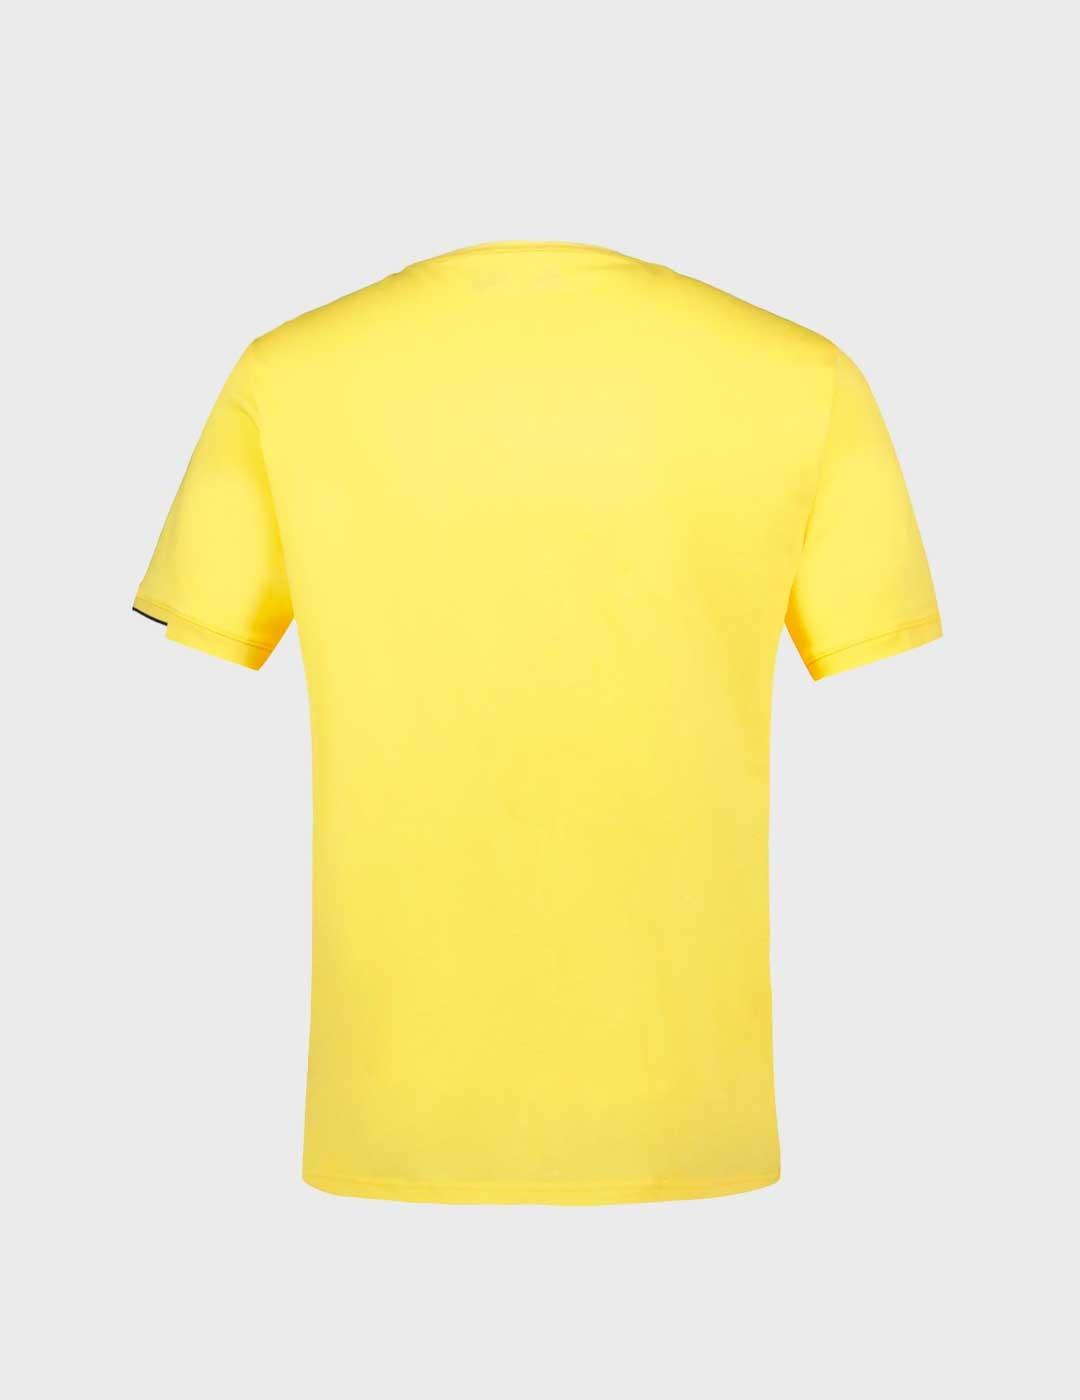 Camiseta Le Coq Sportif Terre Battue 83 amarilla para hombre